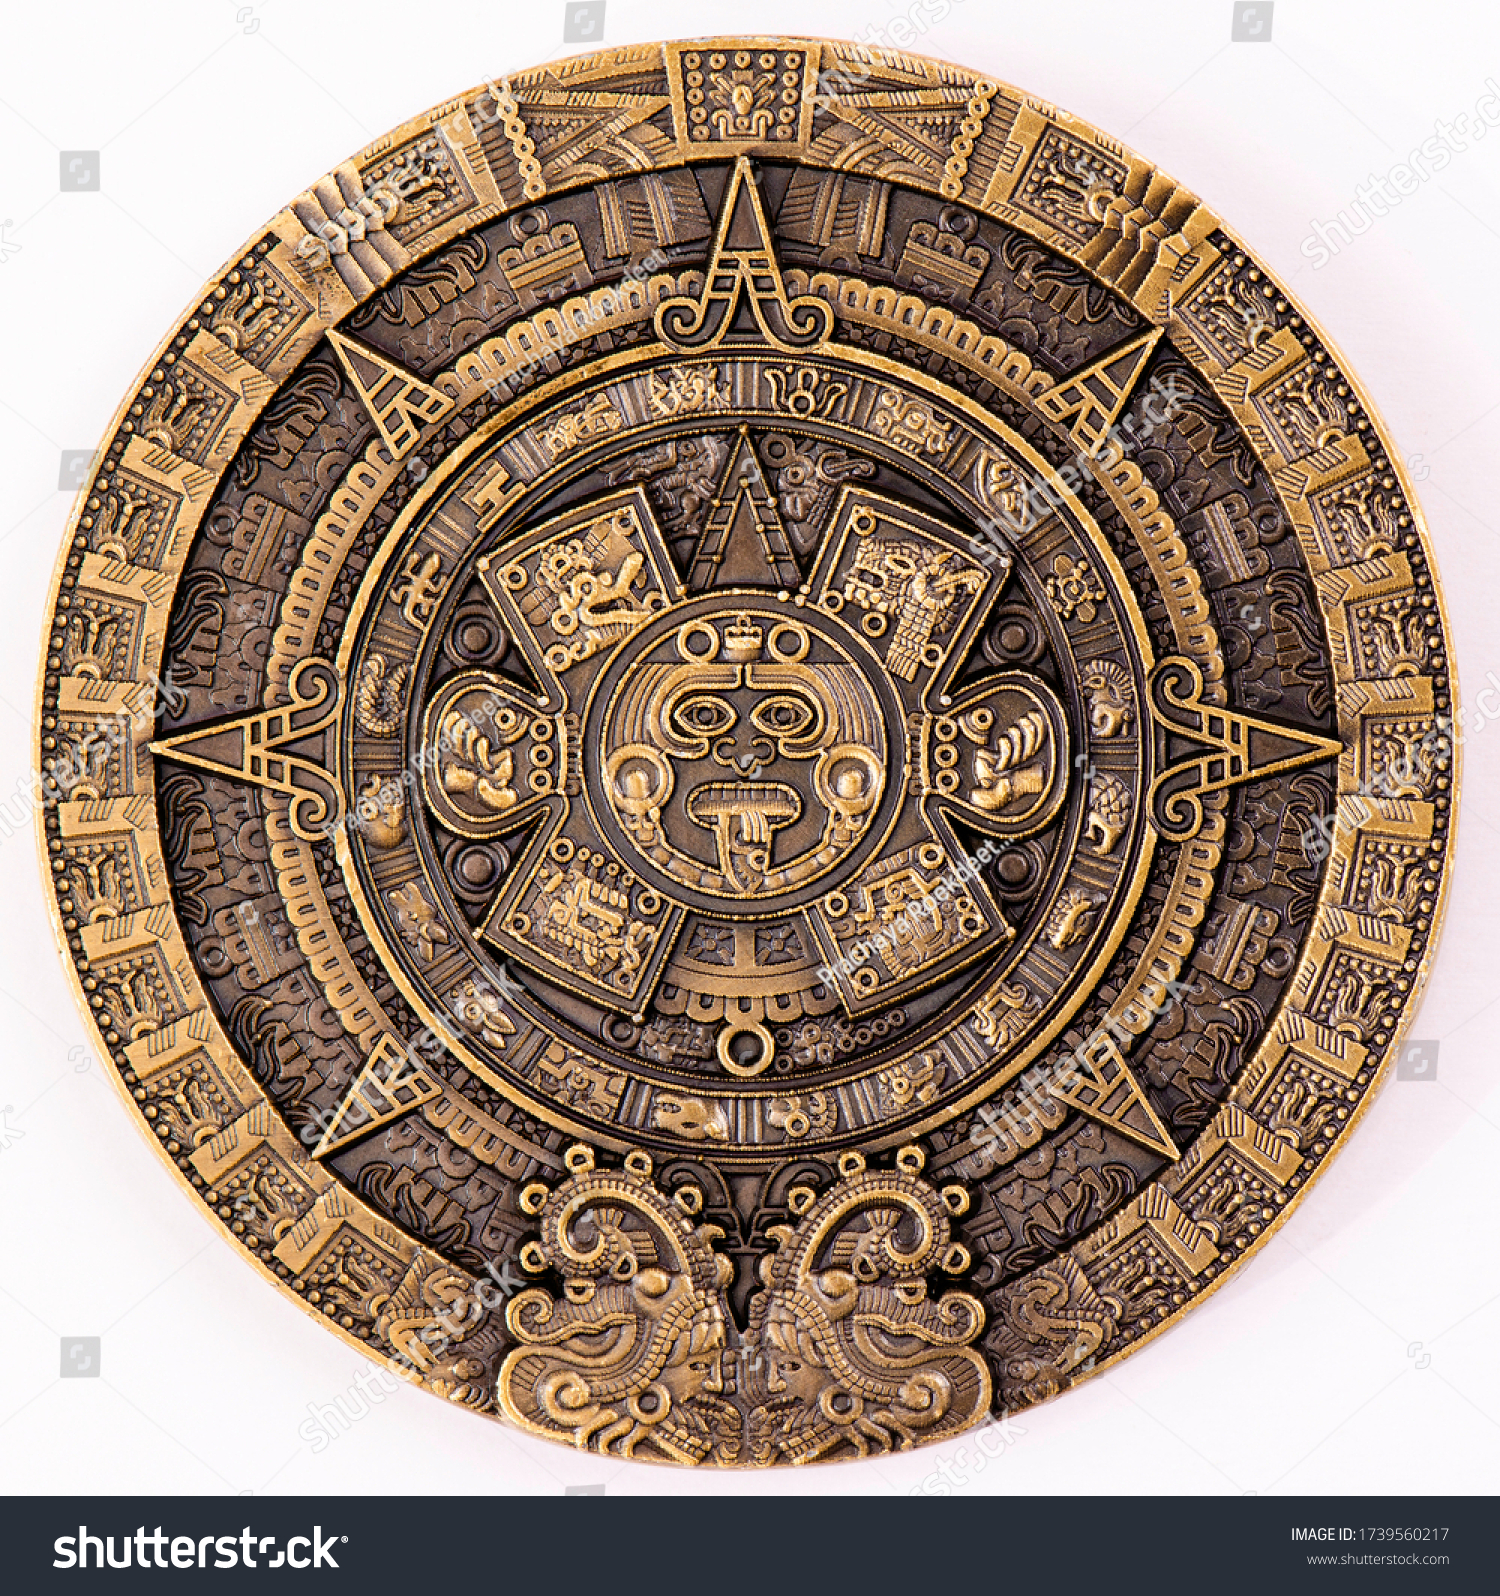 Maya Gold Plated Coin Mexico Mayan Stok Fotoğrafı 1739560217 Shutterstock.